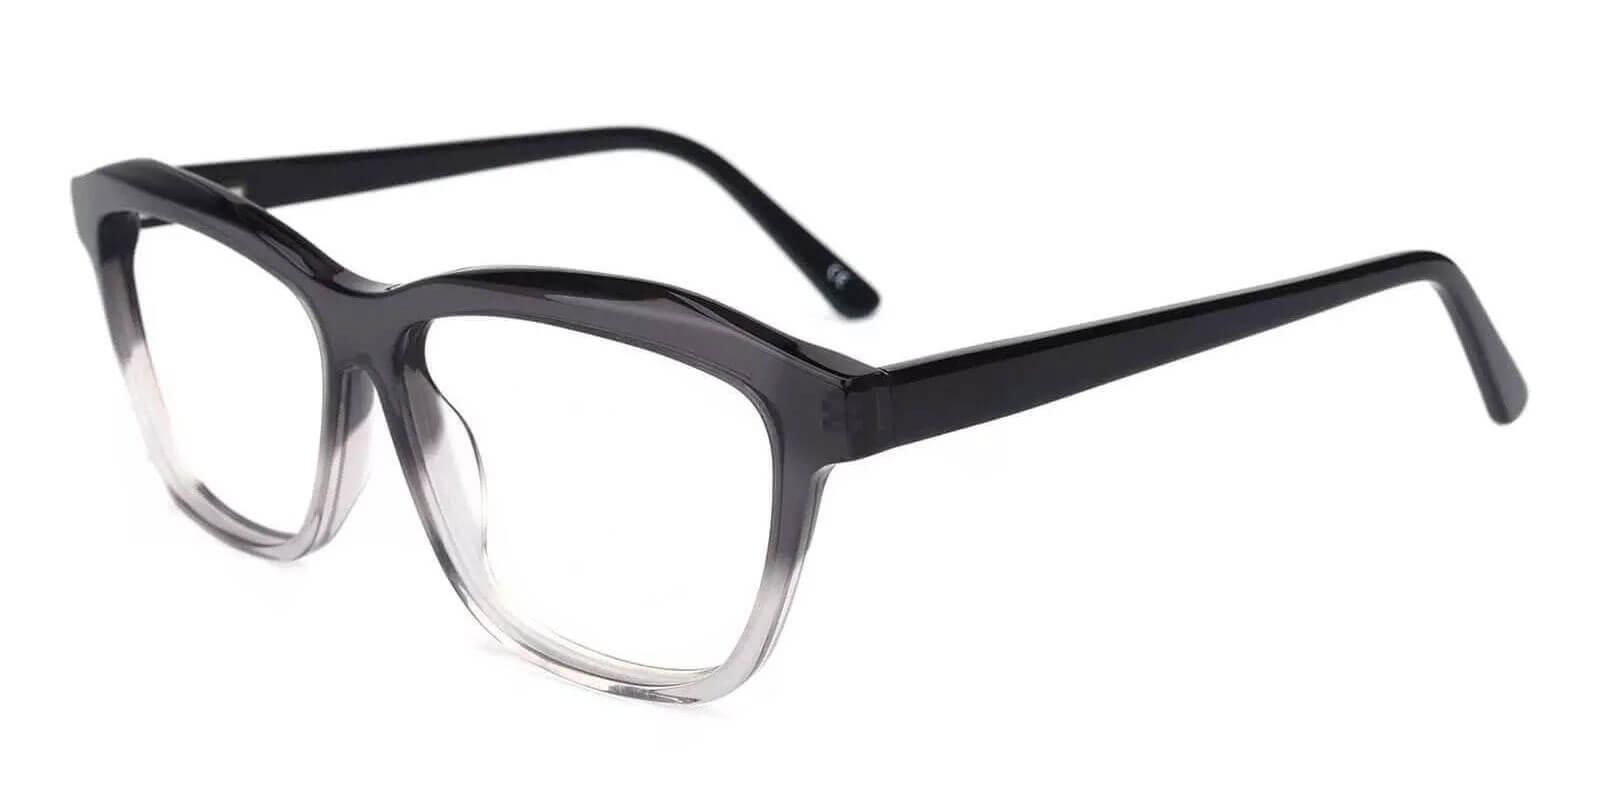 Sonia Translucent Acetate Eyeglasses , SpringHinges , UniversalBridgeFit Frames from ABBE Glasses